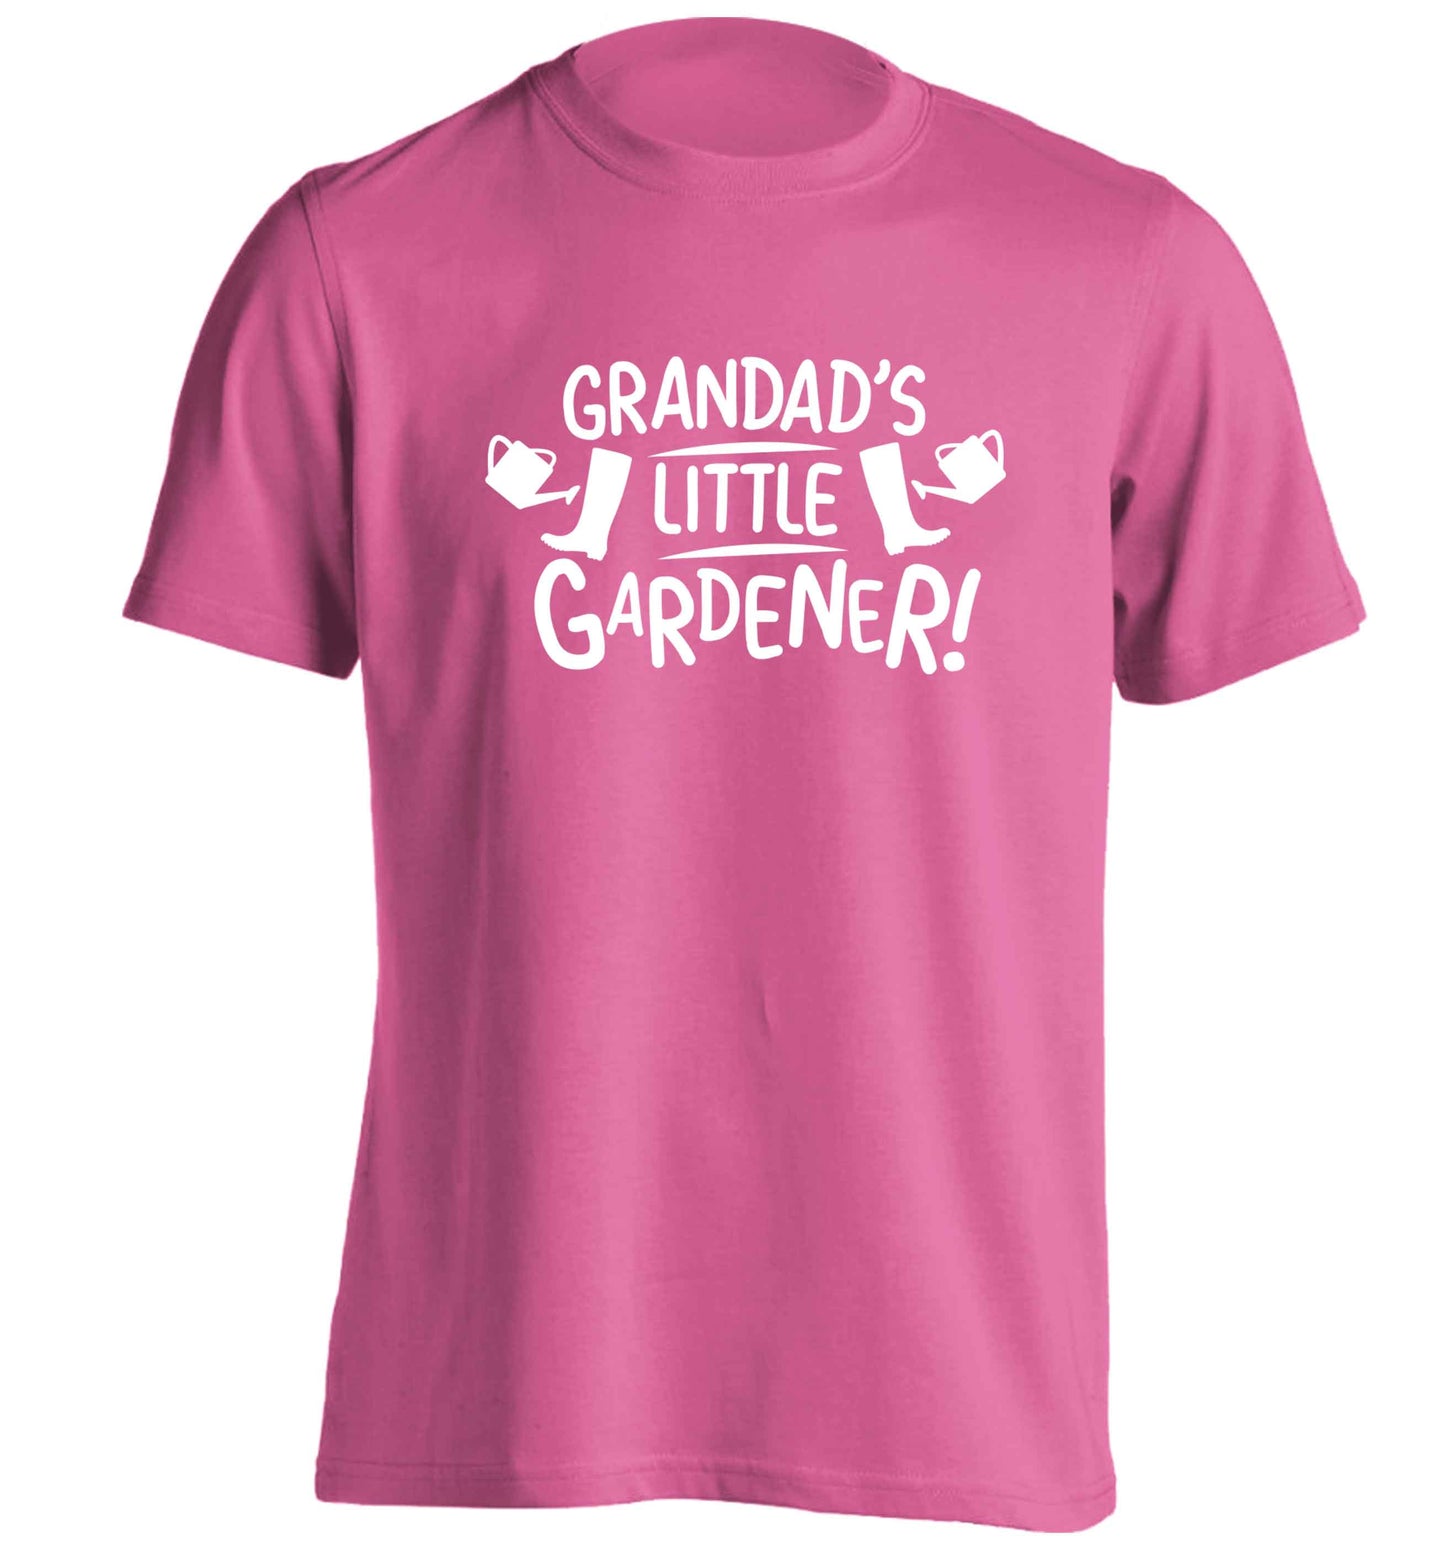 Grandad's little gardener adults unisex pink Tshirt 2XL